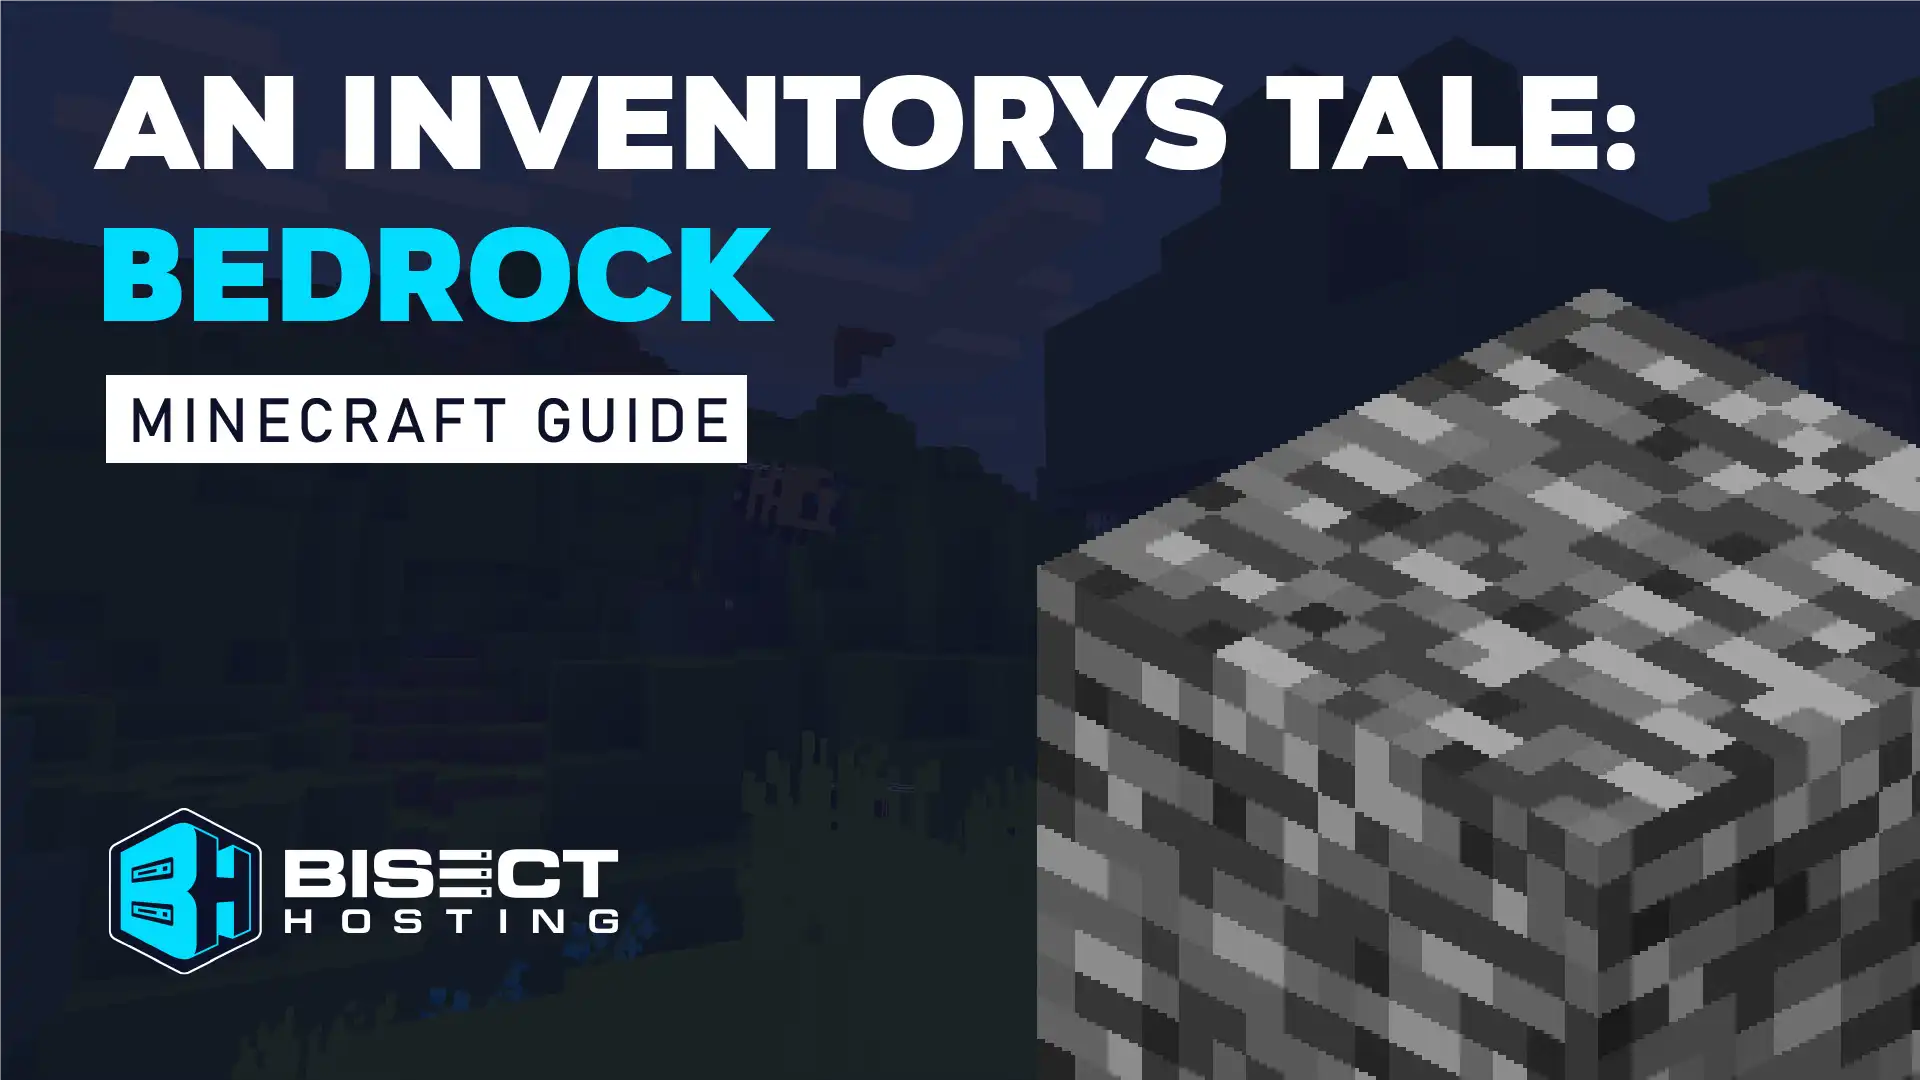 An Inventory’s Tale: Bedrock